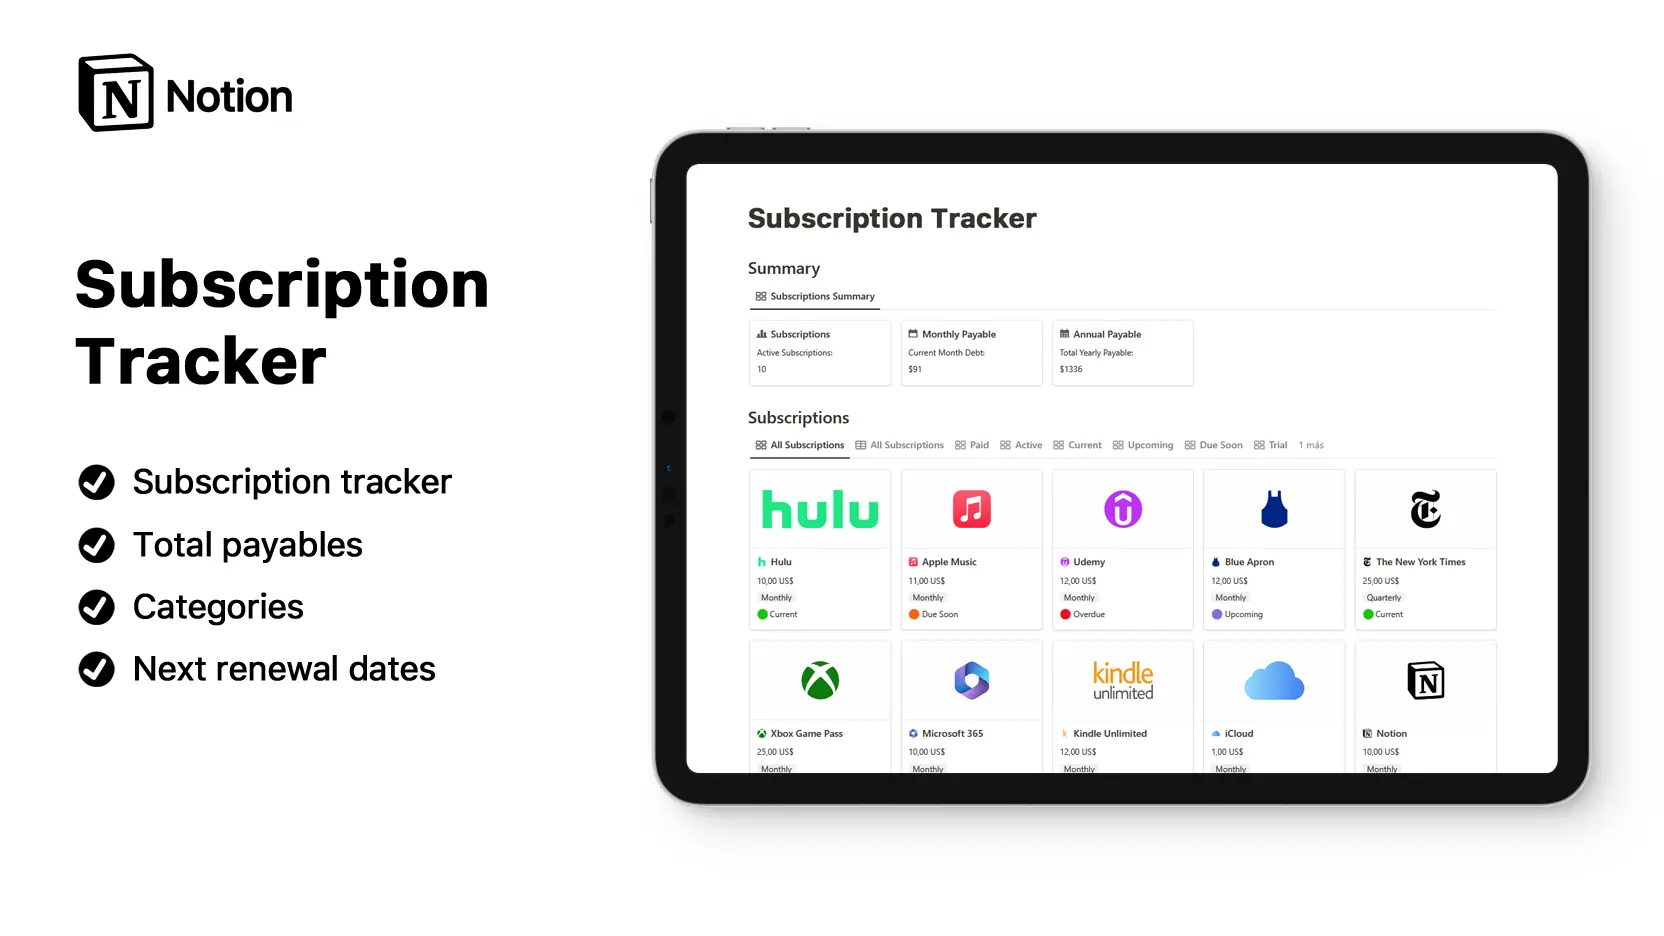 Subscription Tracker image